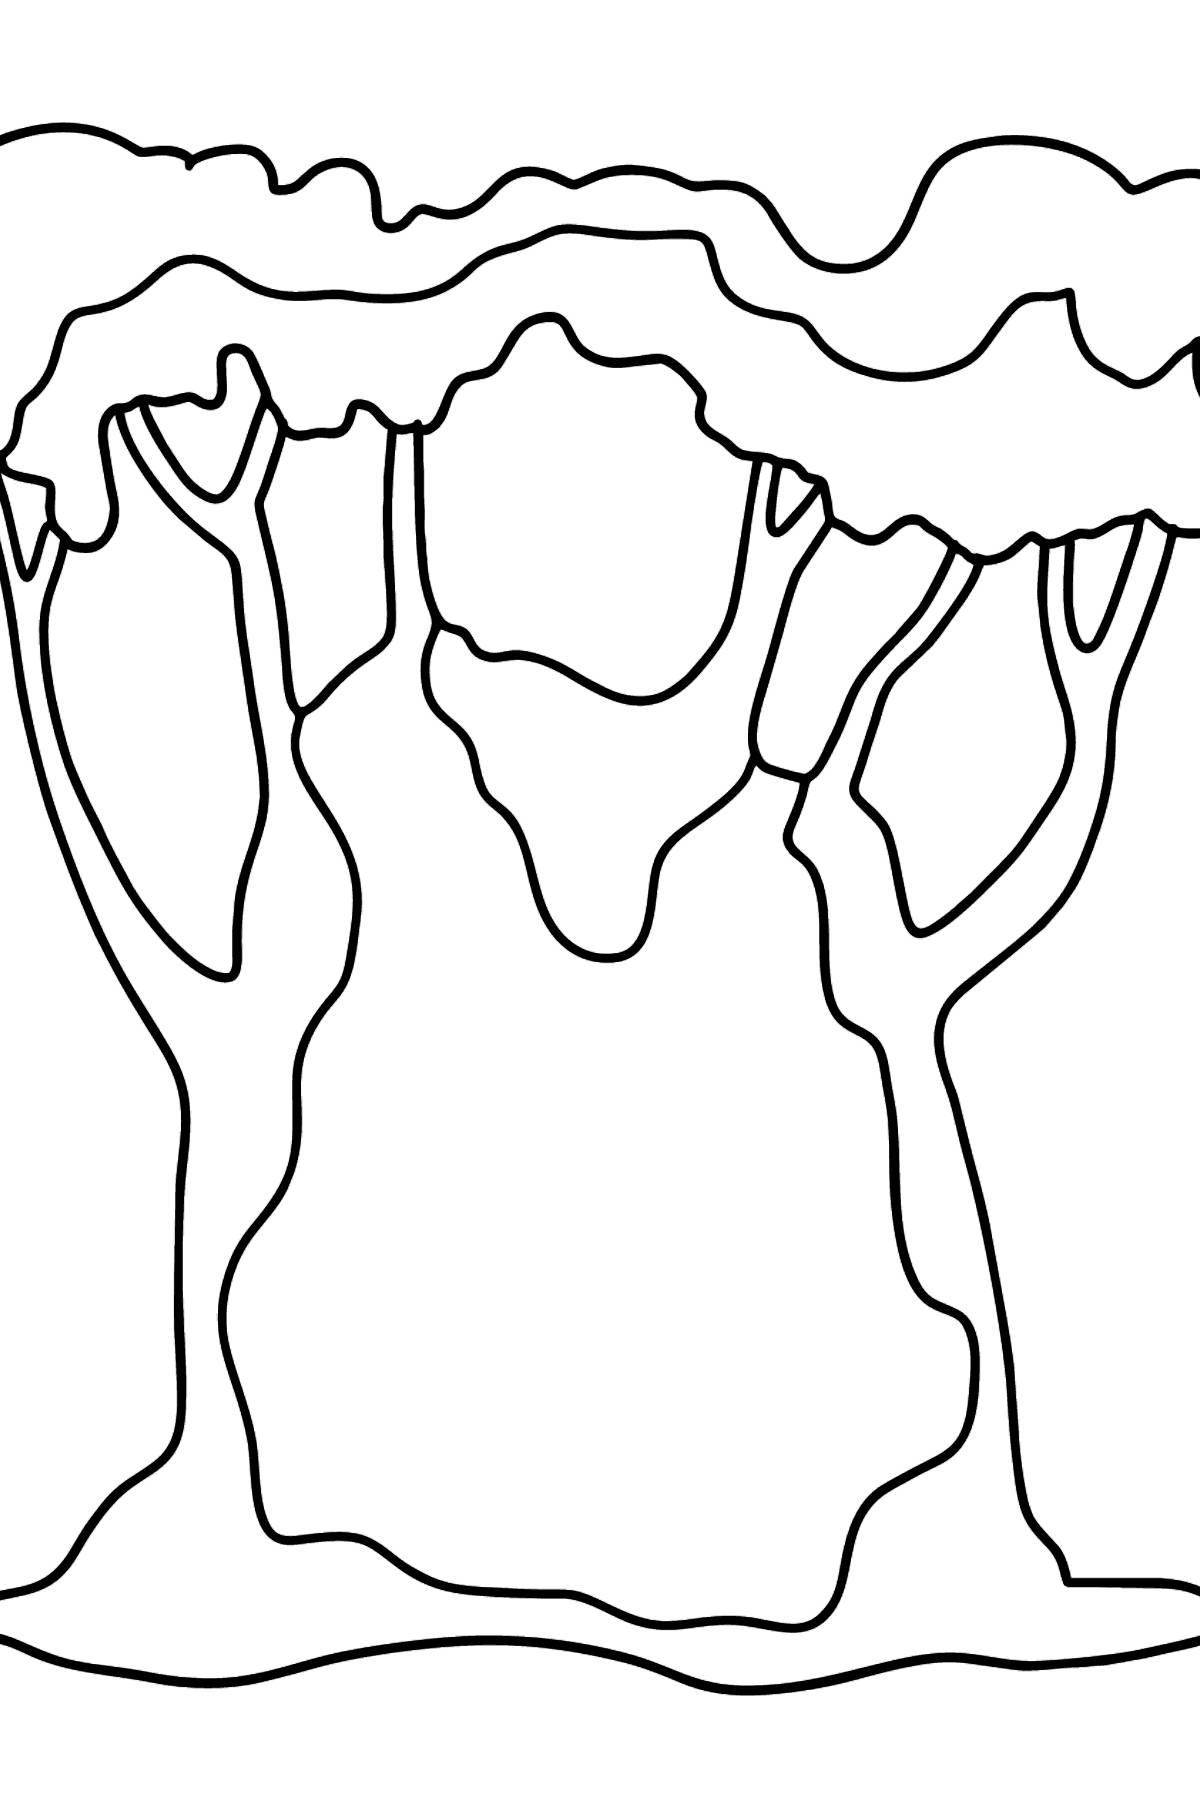 Exotic baobab coloring page